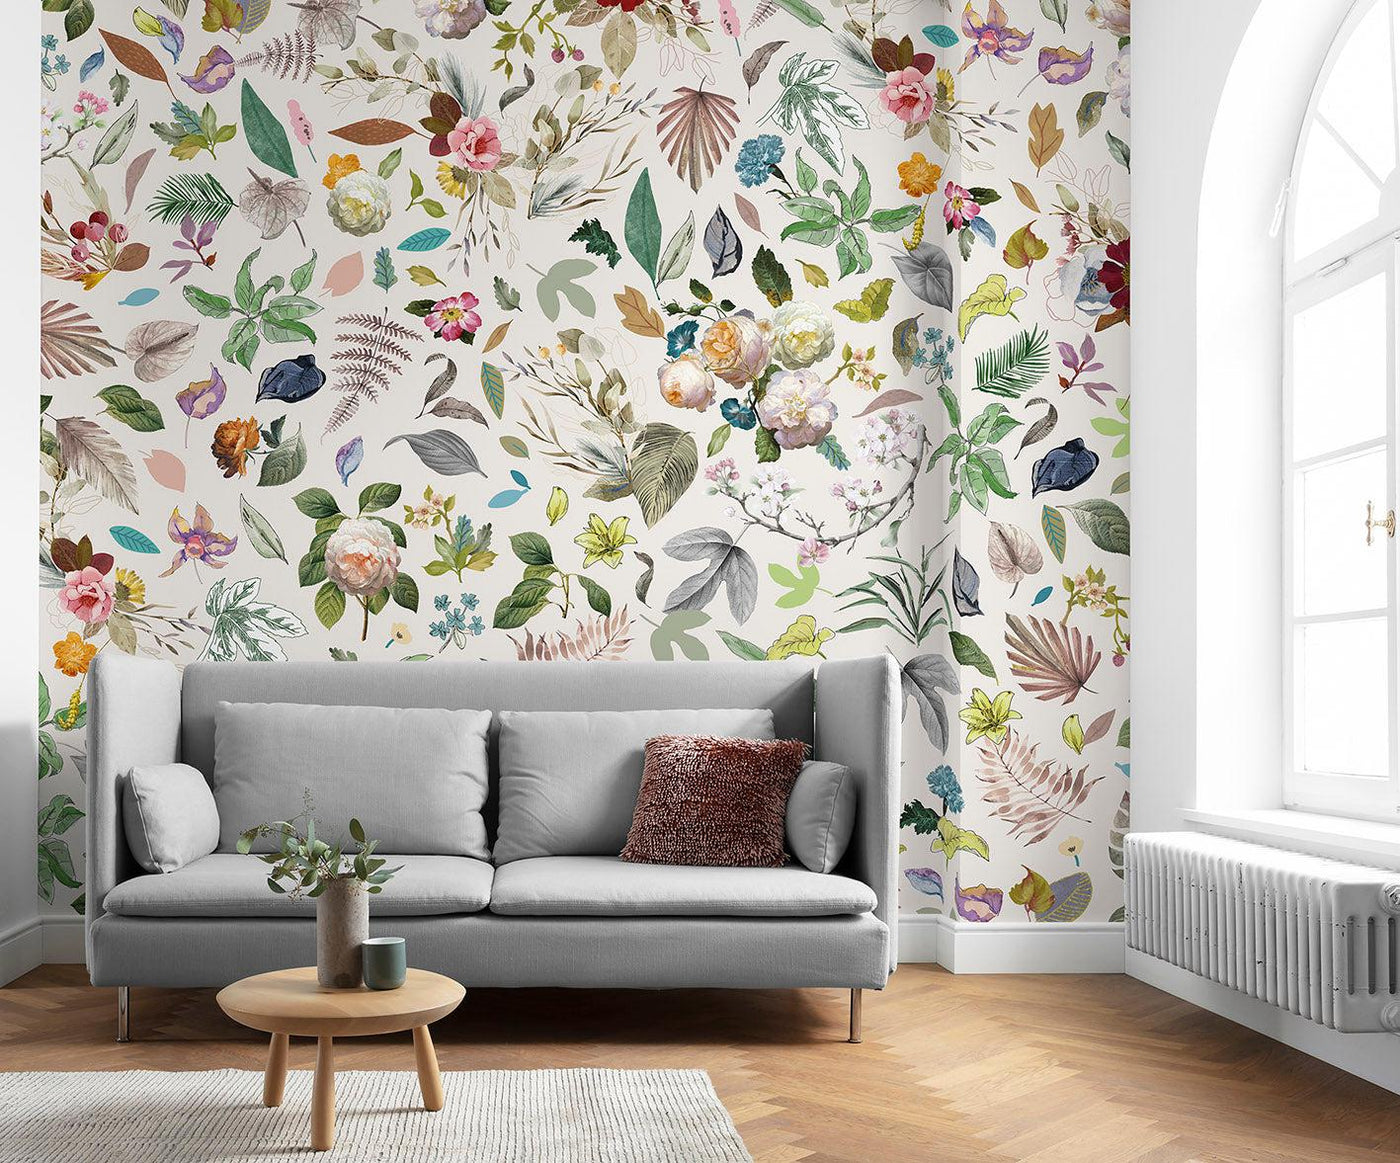 Les Quatre Saisons Mural Wallpaper